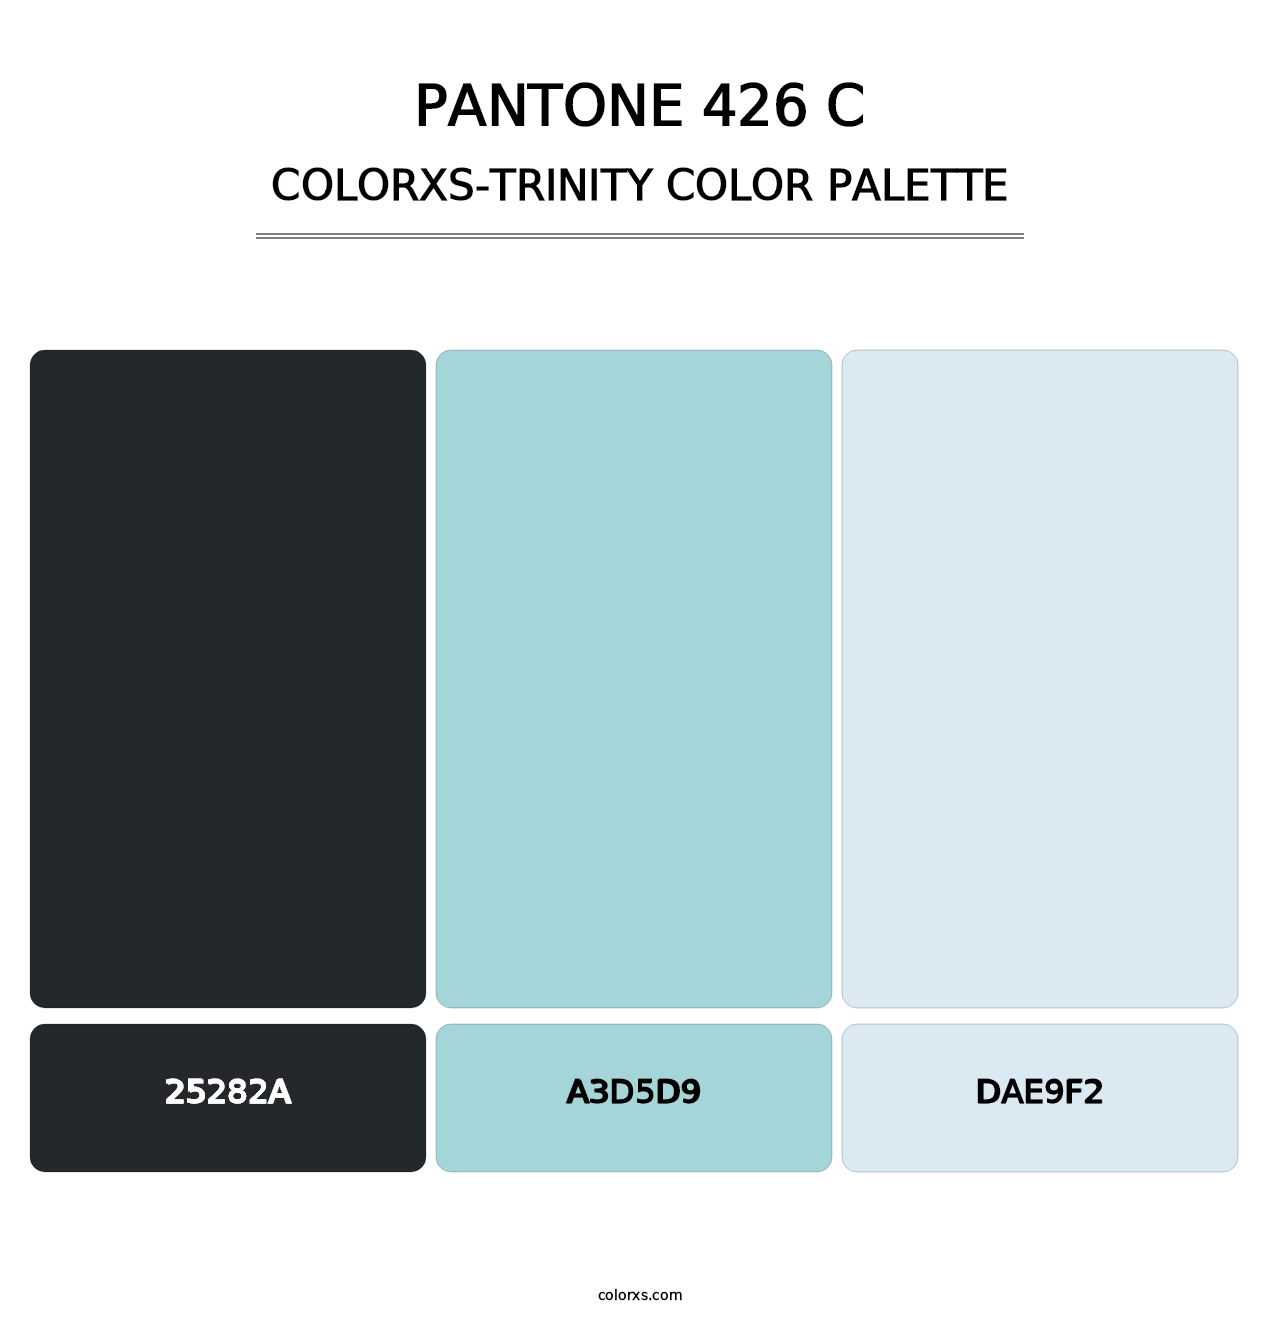 PANTONE 426 C - Colorxs Trinity Palette